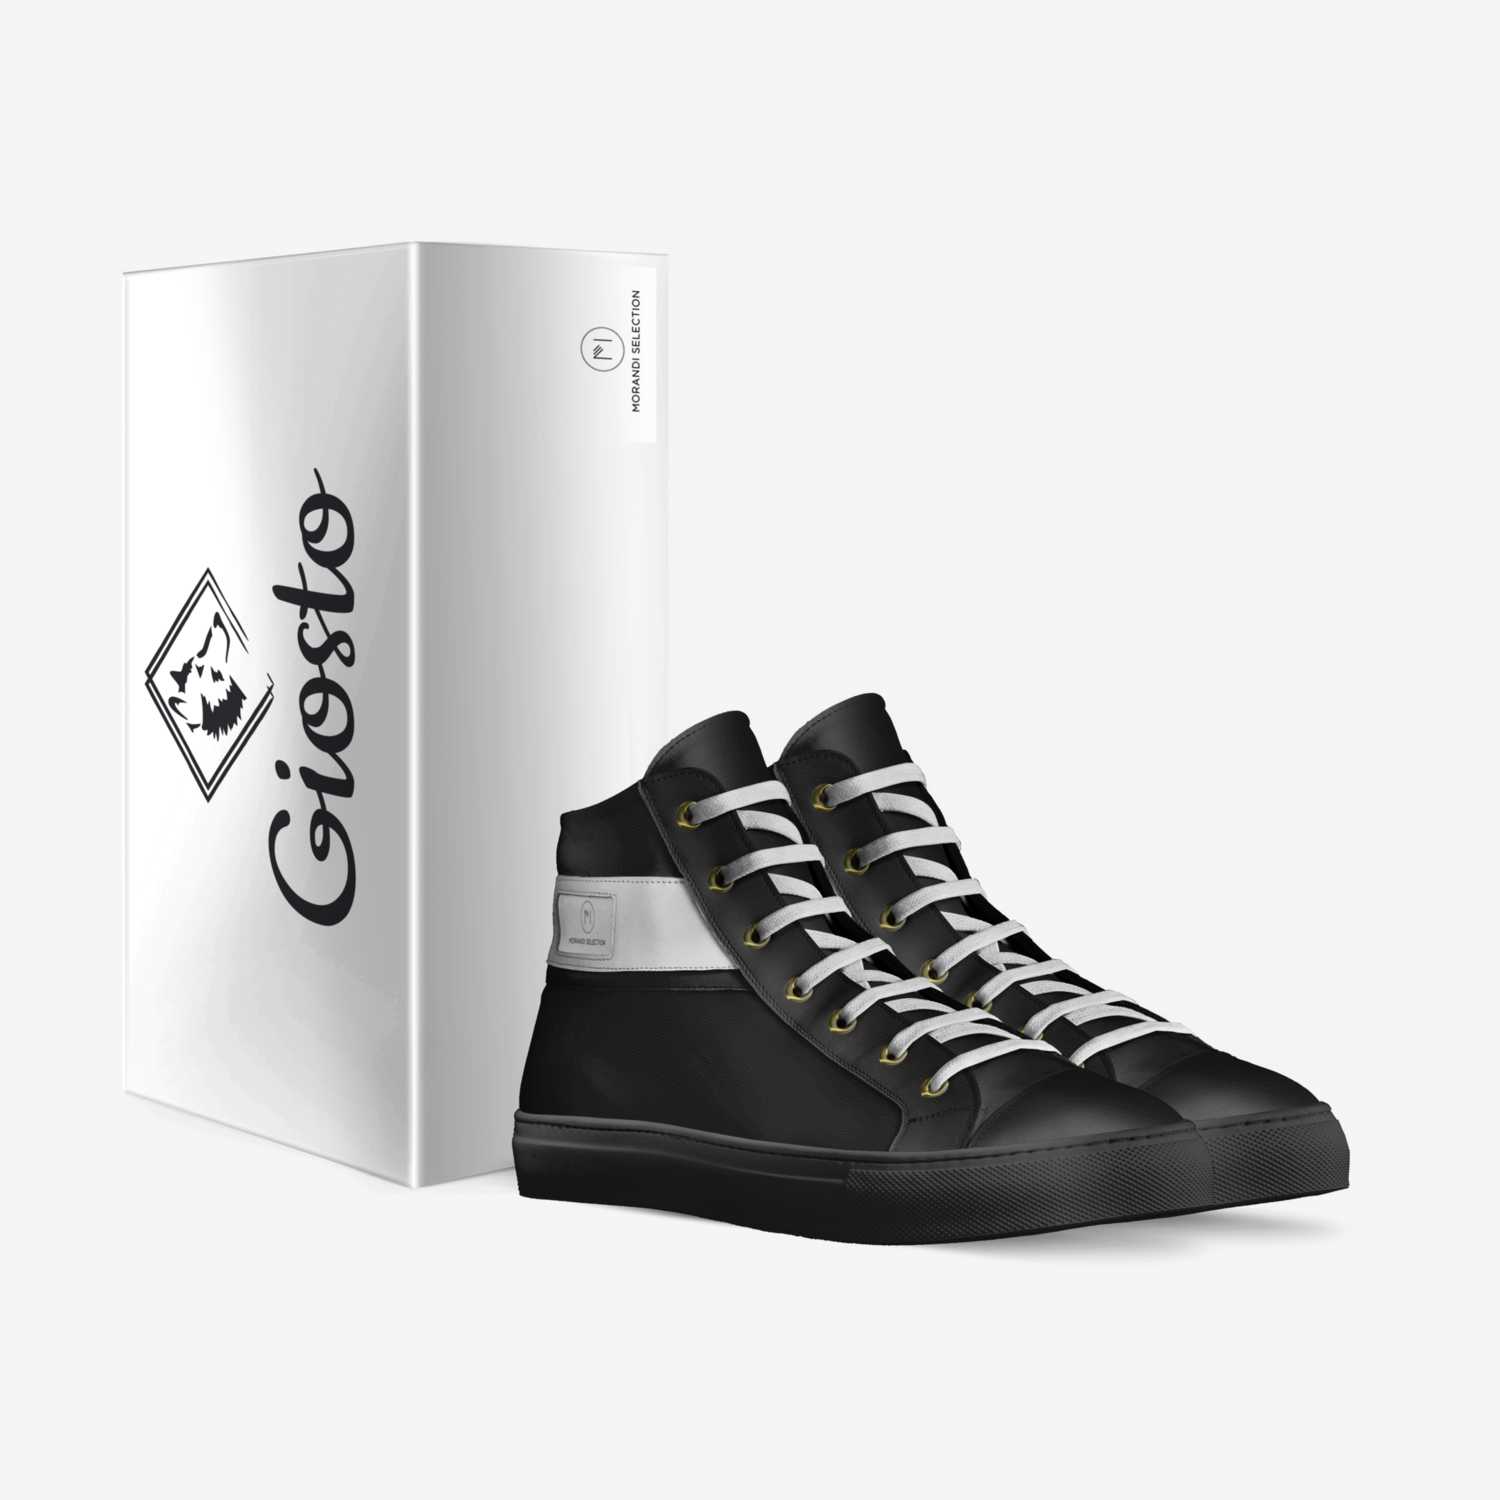 Giosto Morandi custom made in Italy shoes by Giorgio Franco | Box view